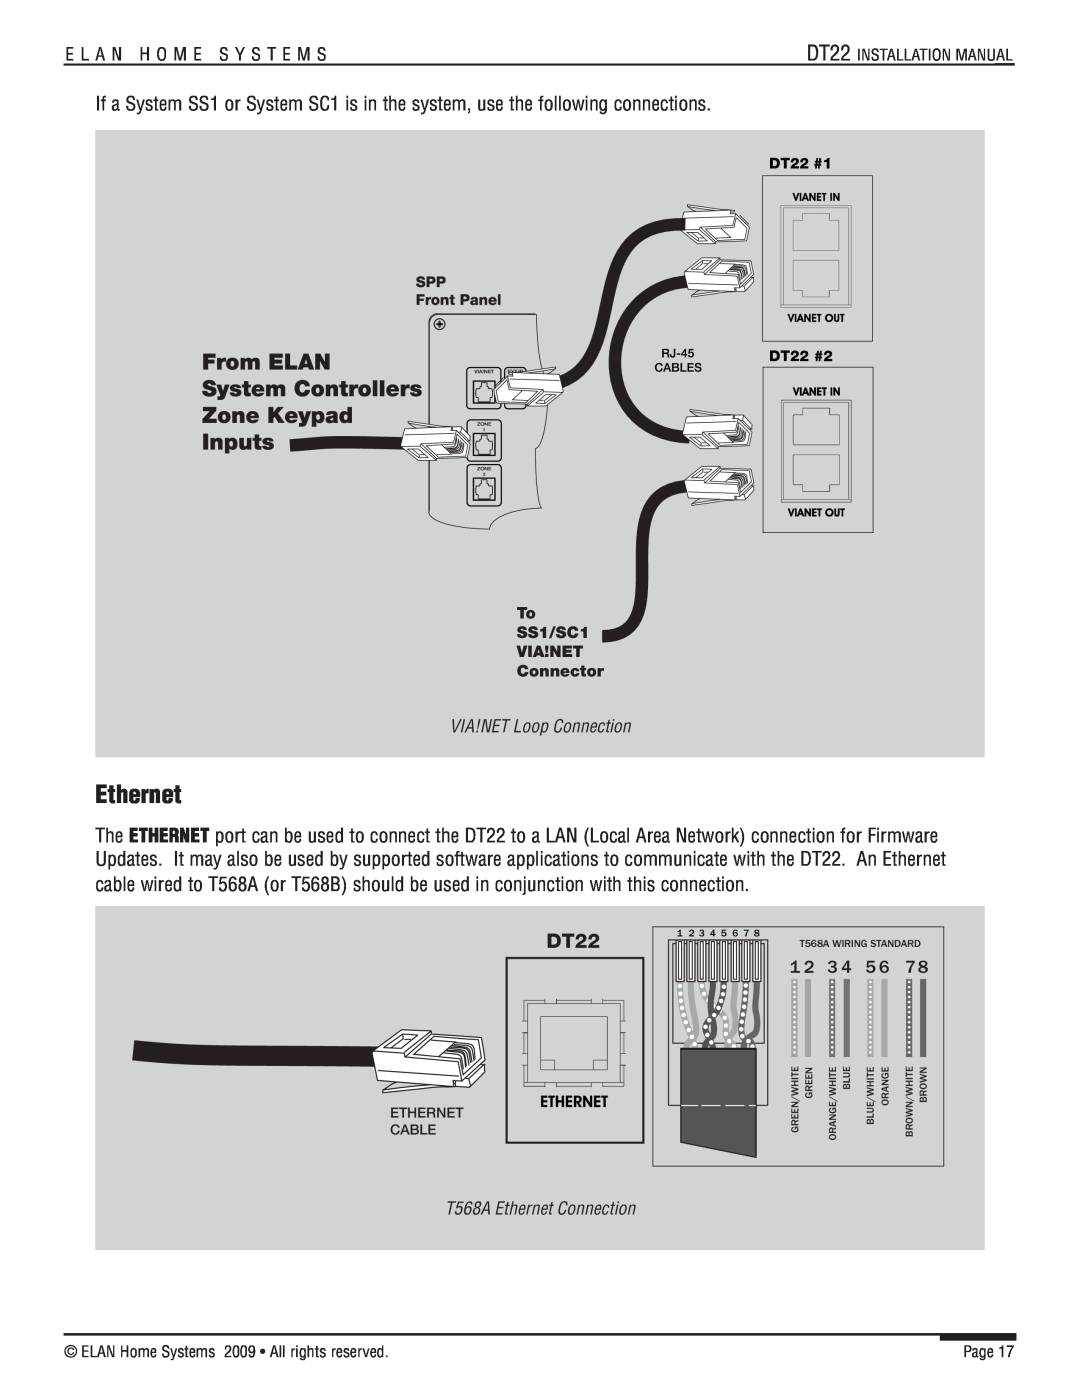 ELAN Home Systems DT22 manual Ethernet 